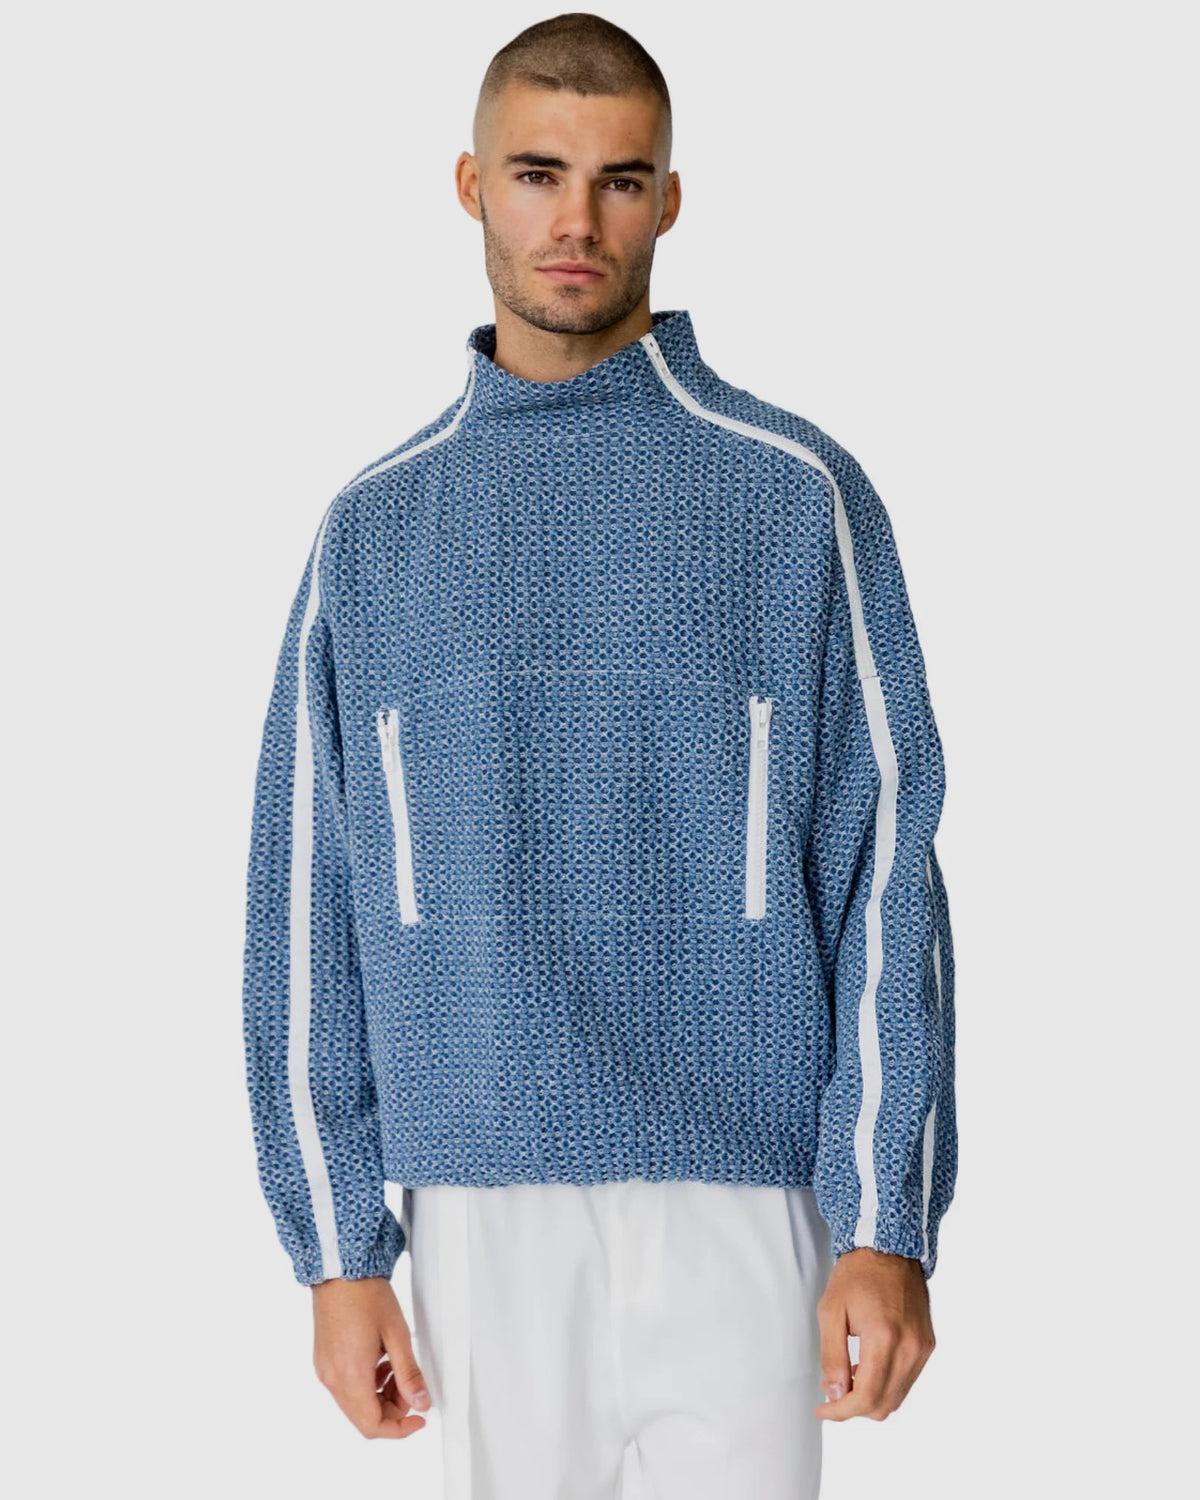 Justin Cassin Daylan High Sweatshirt in Blue Color